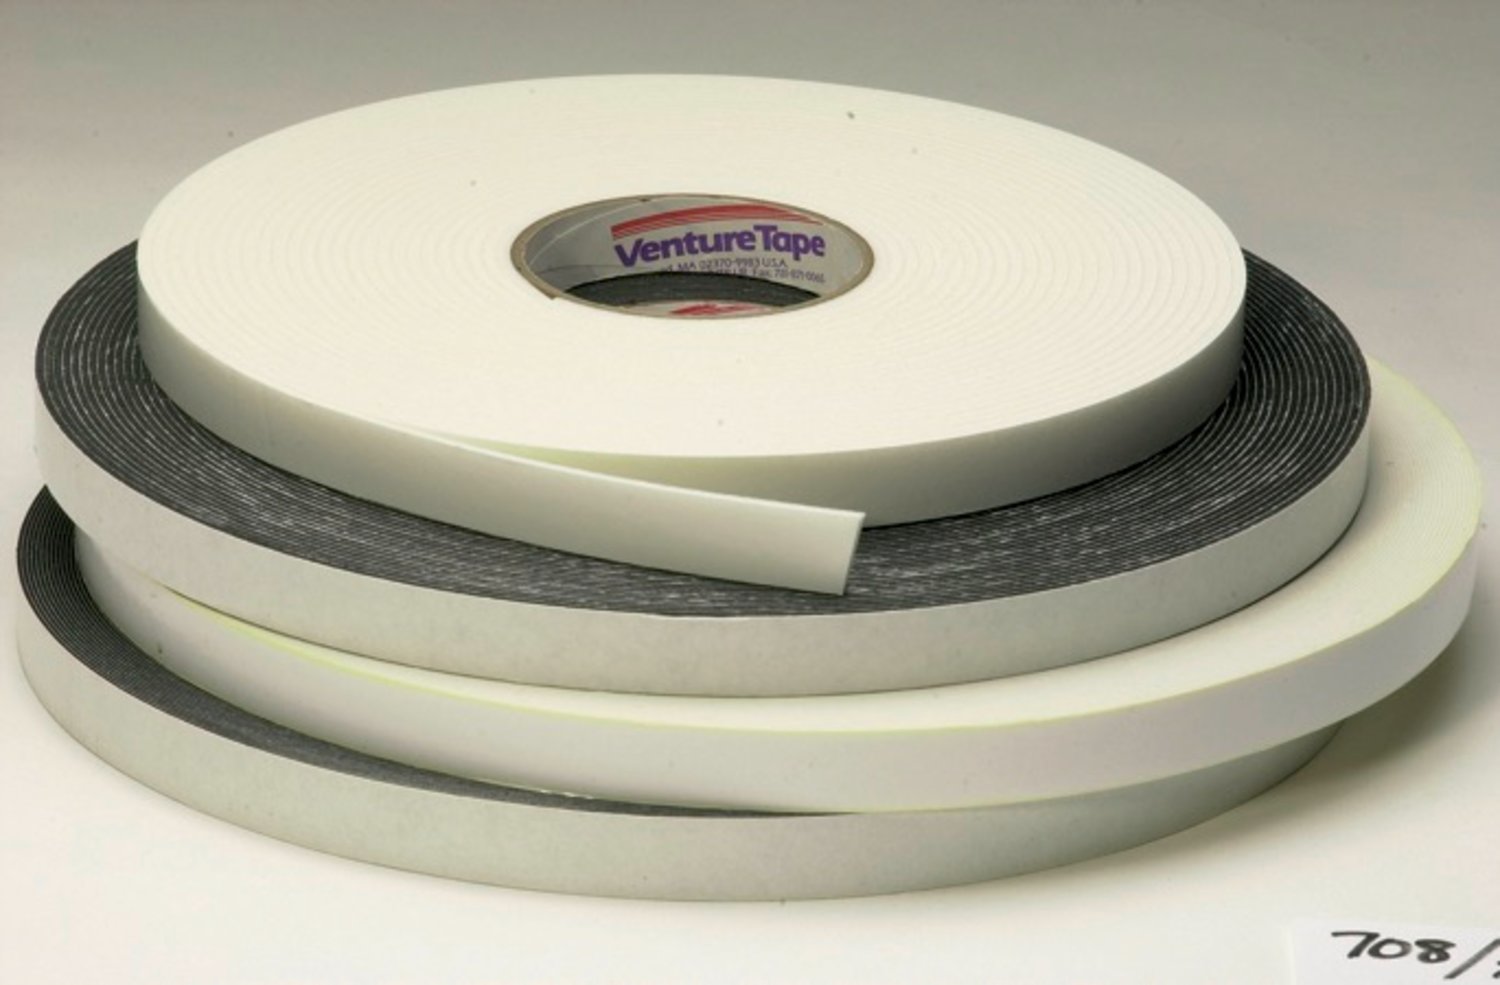 7010296303 - 3M Venture Tape Double Sided Polyethylene Foam Glazing Tape VG708,
White, 3/8 in x 85 ft, 125 mil, 53 rolls per case